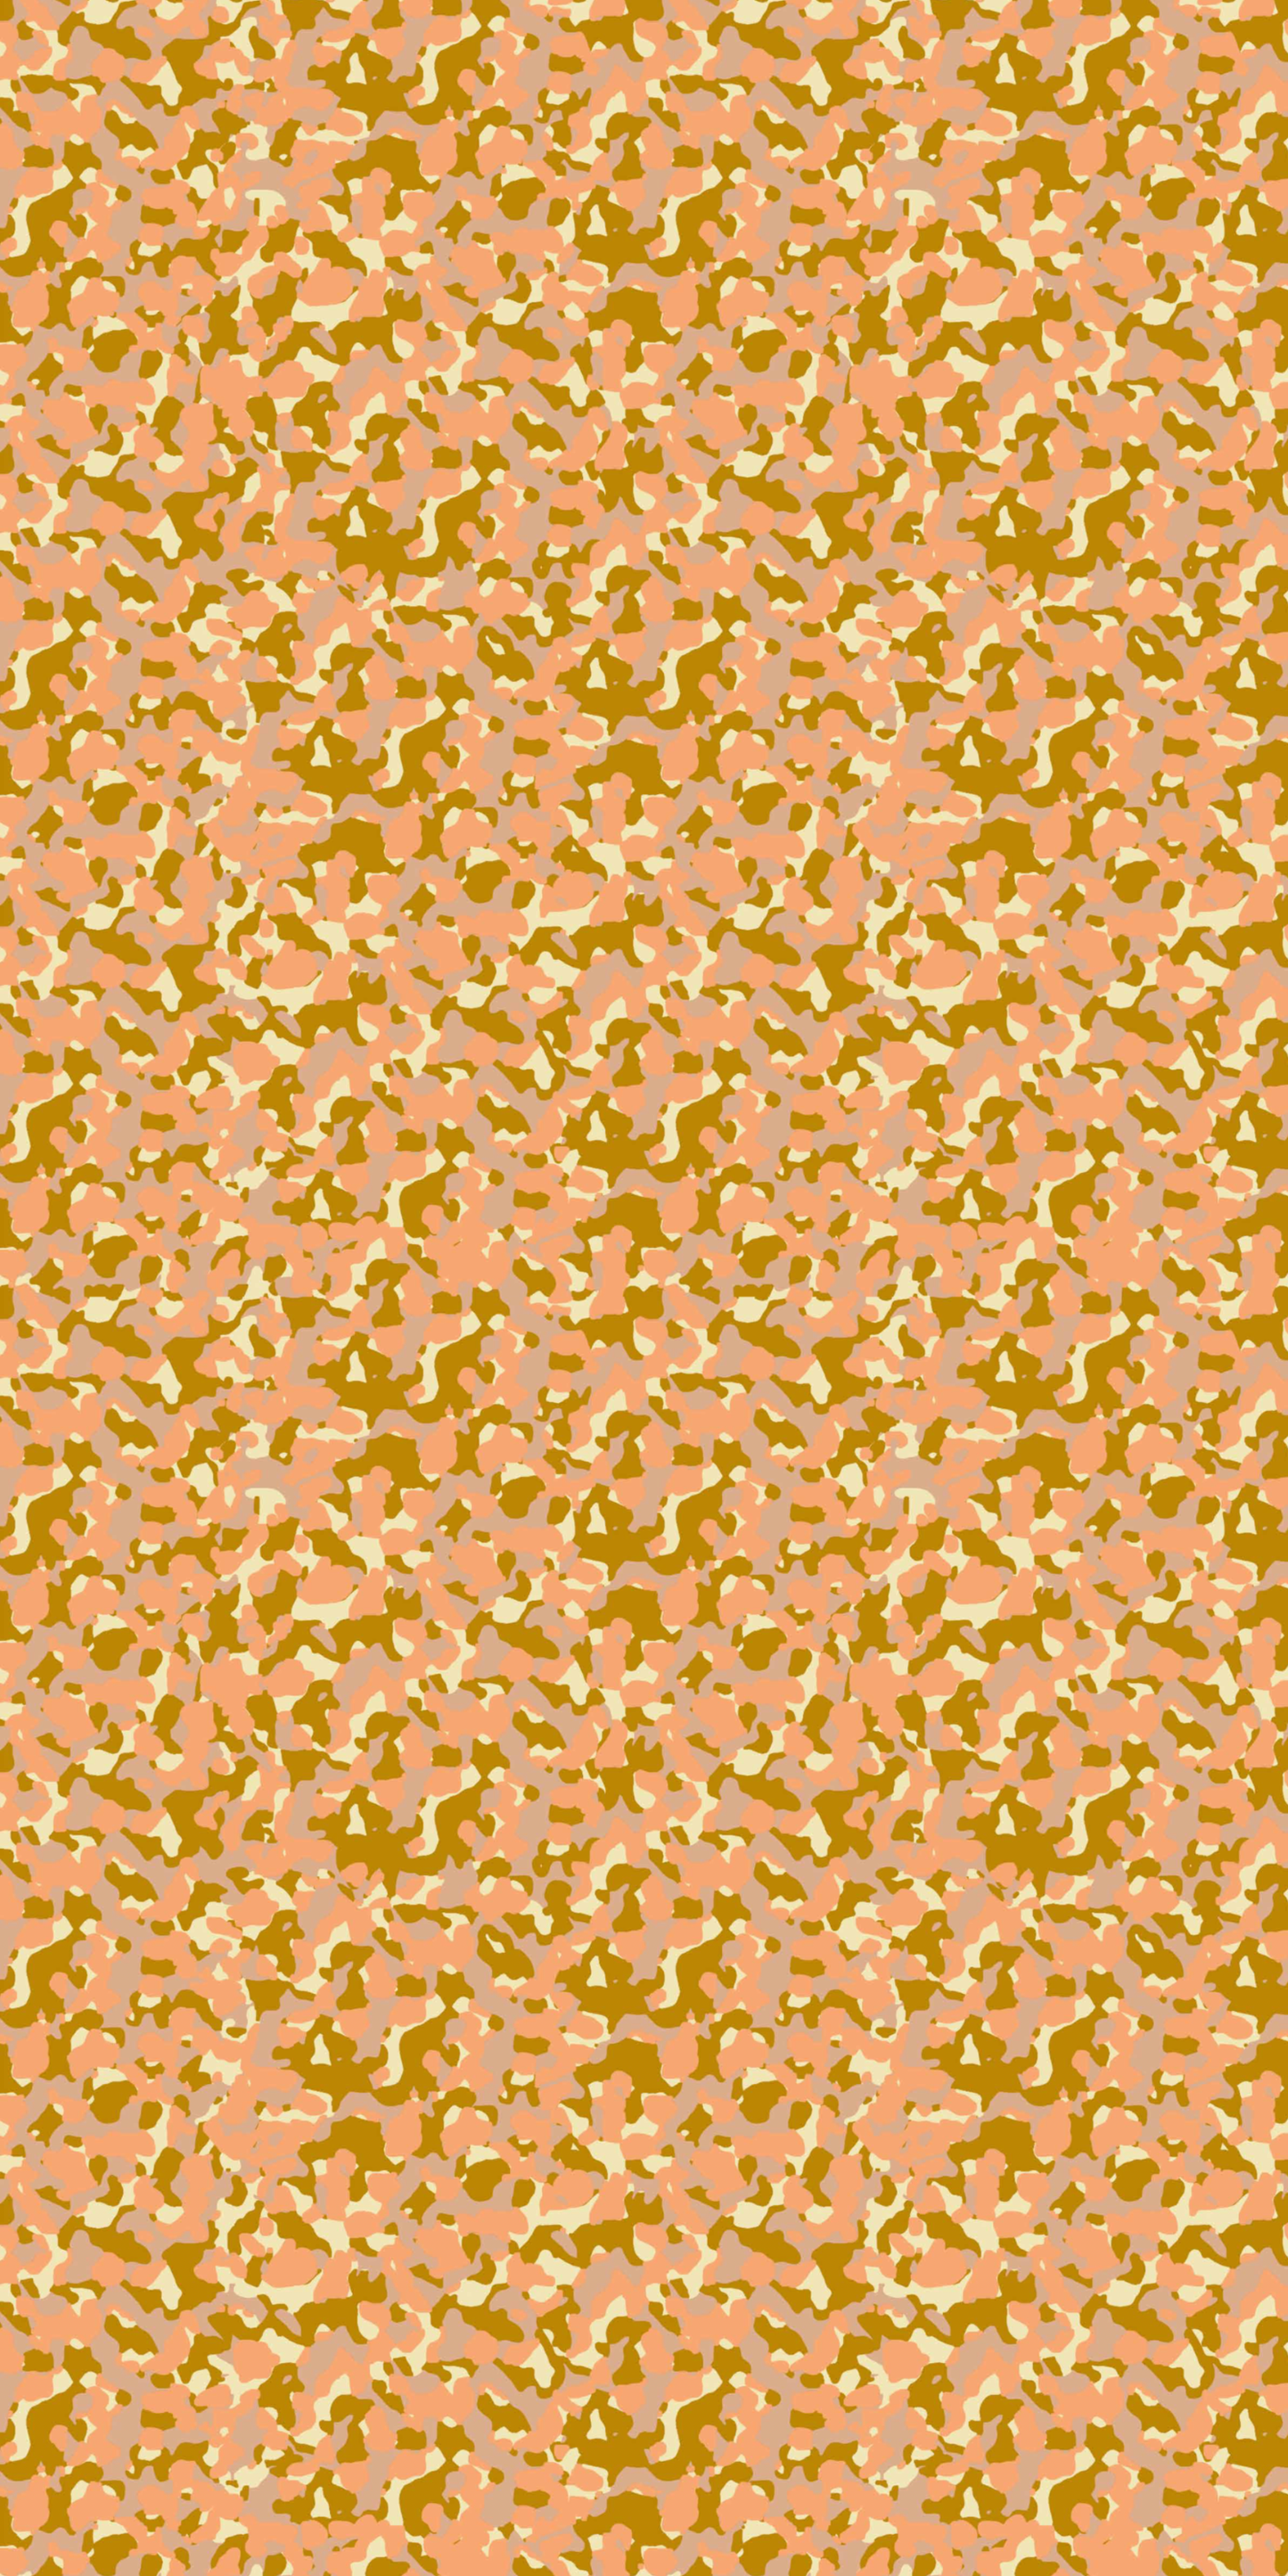 pattern wallpaper louis vuitton camo